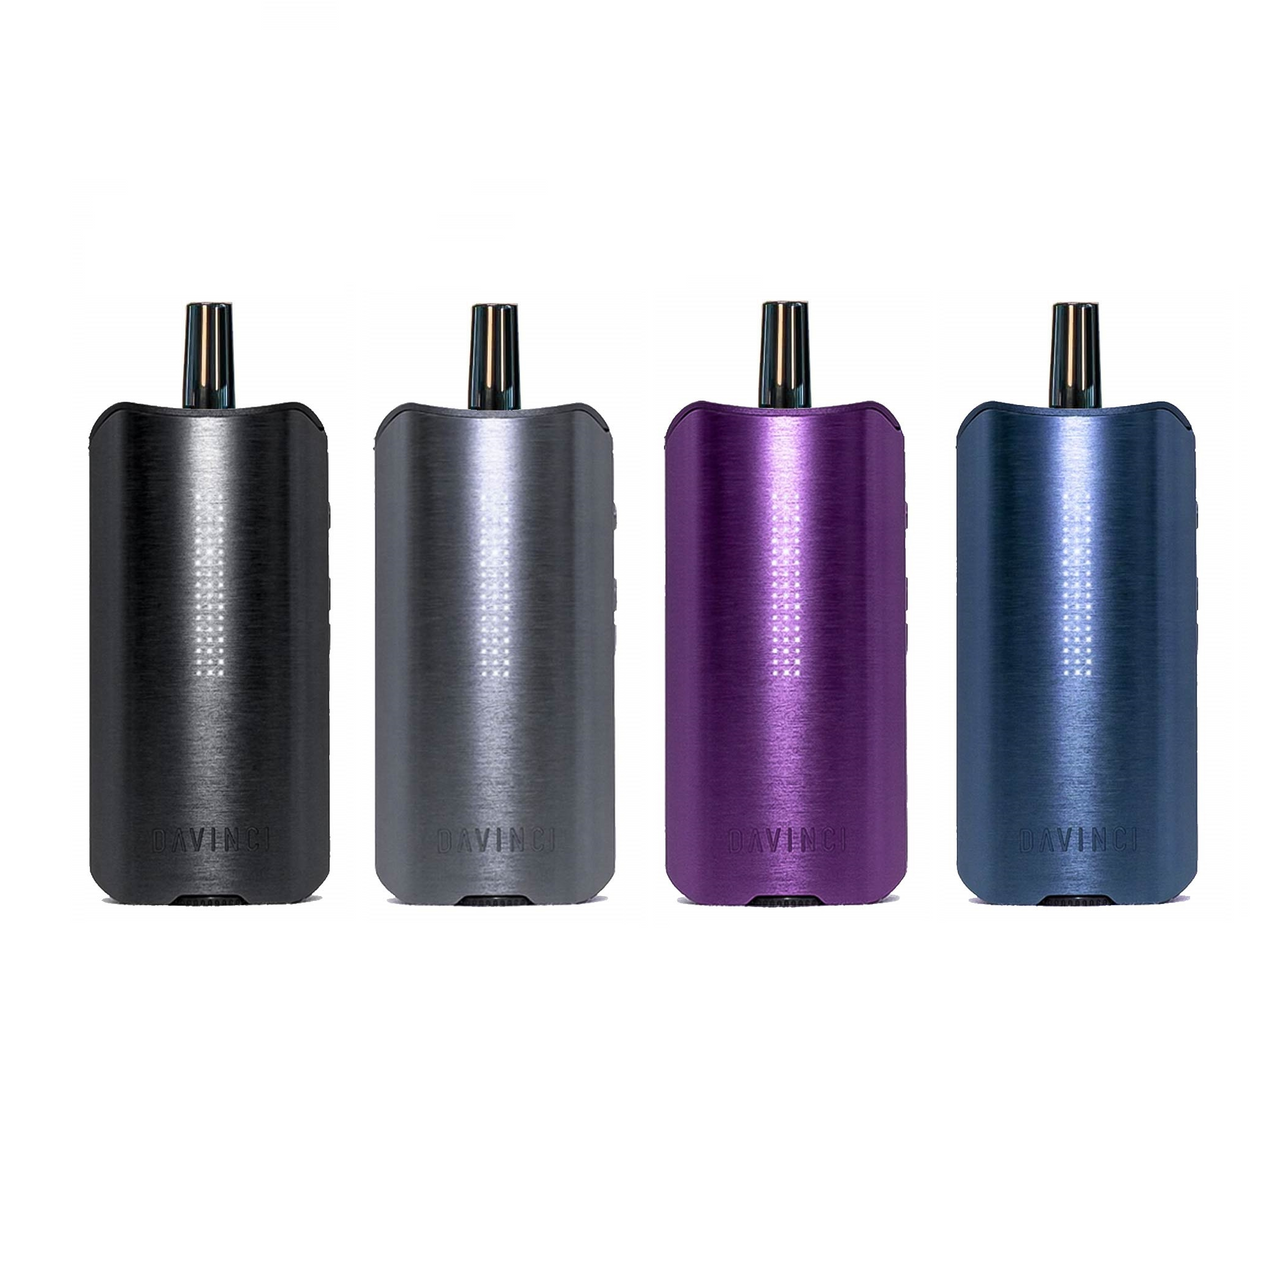 davinci-iq2-vaporizer-portable-dry-herb-vaporizer